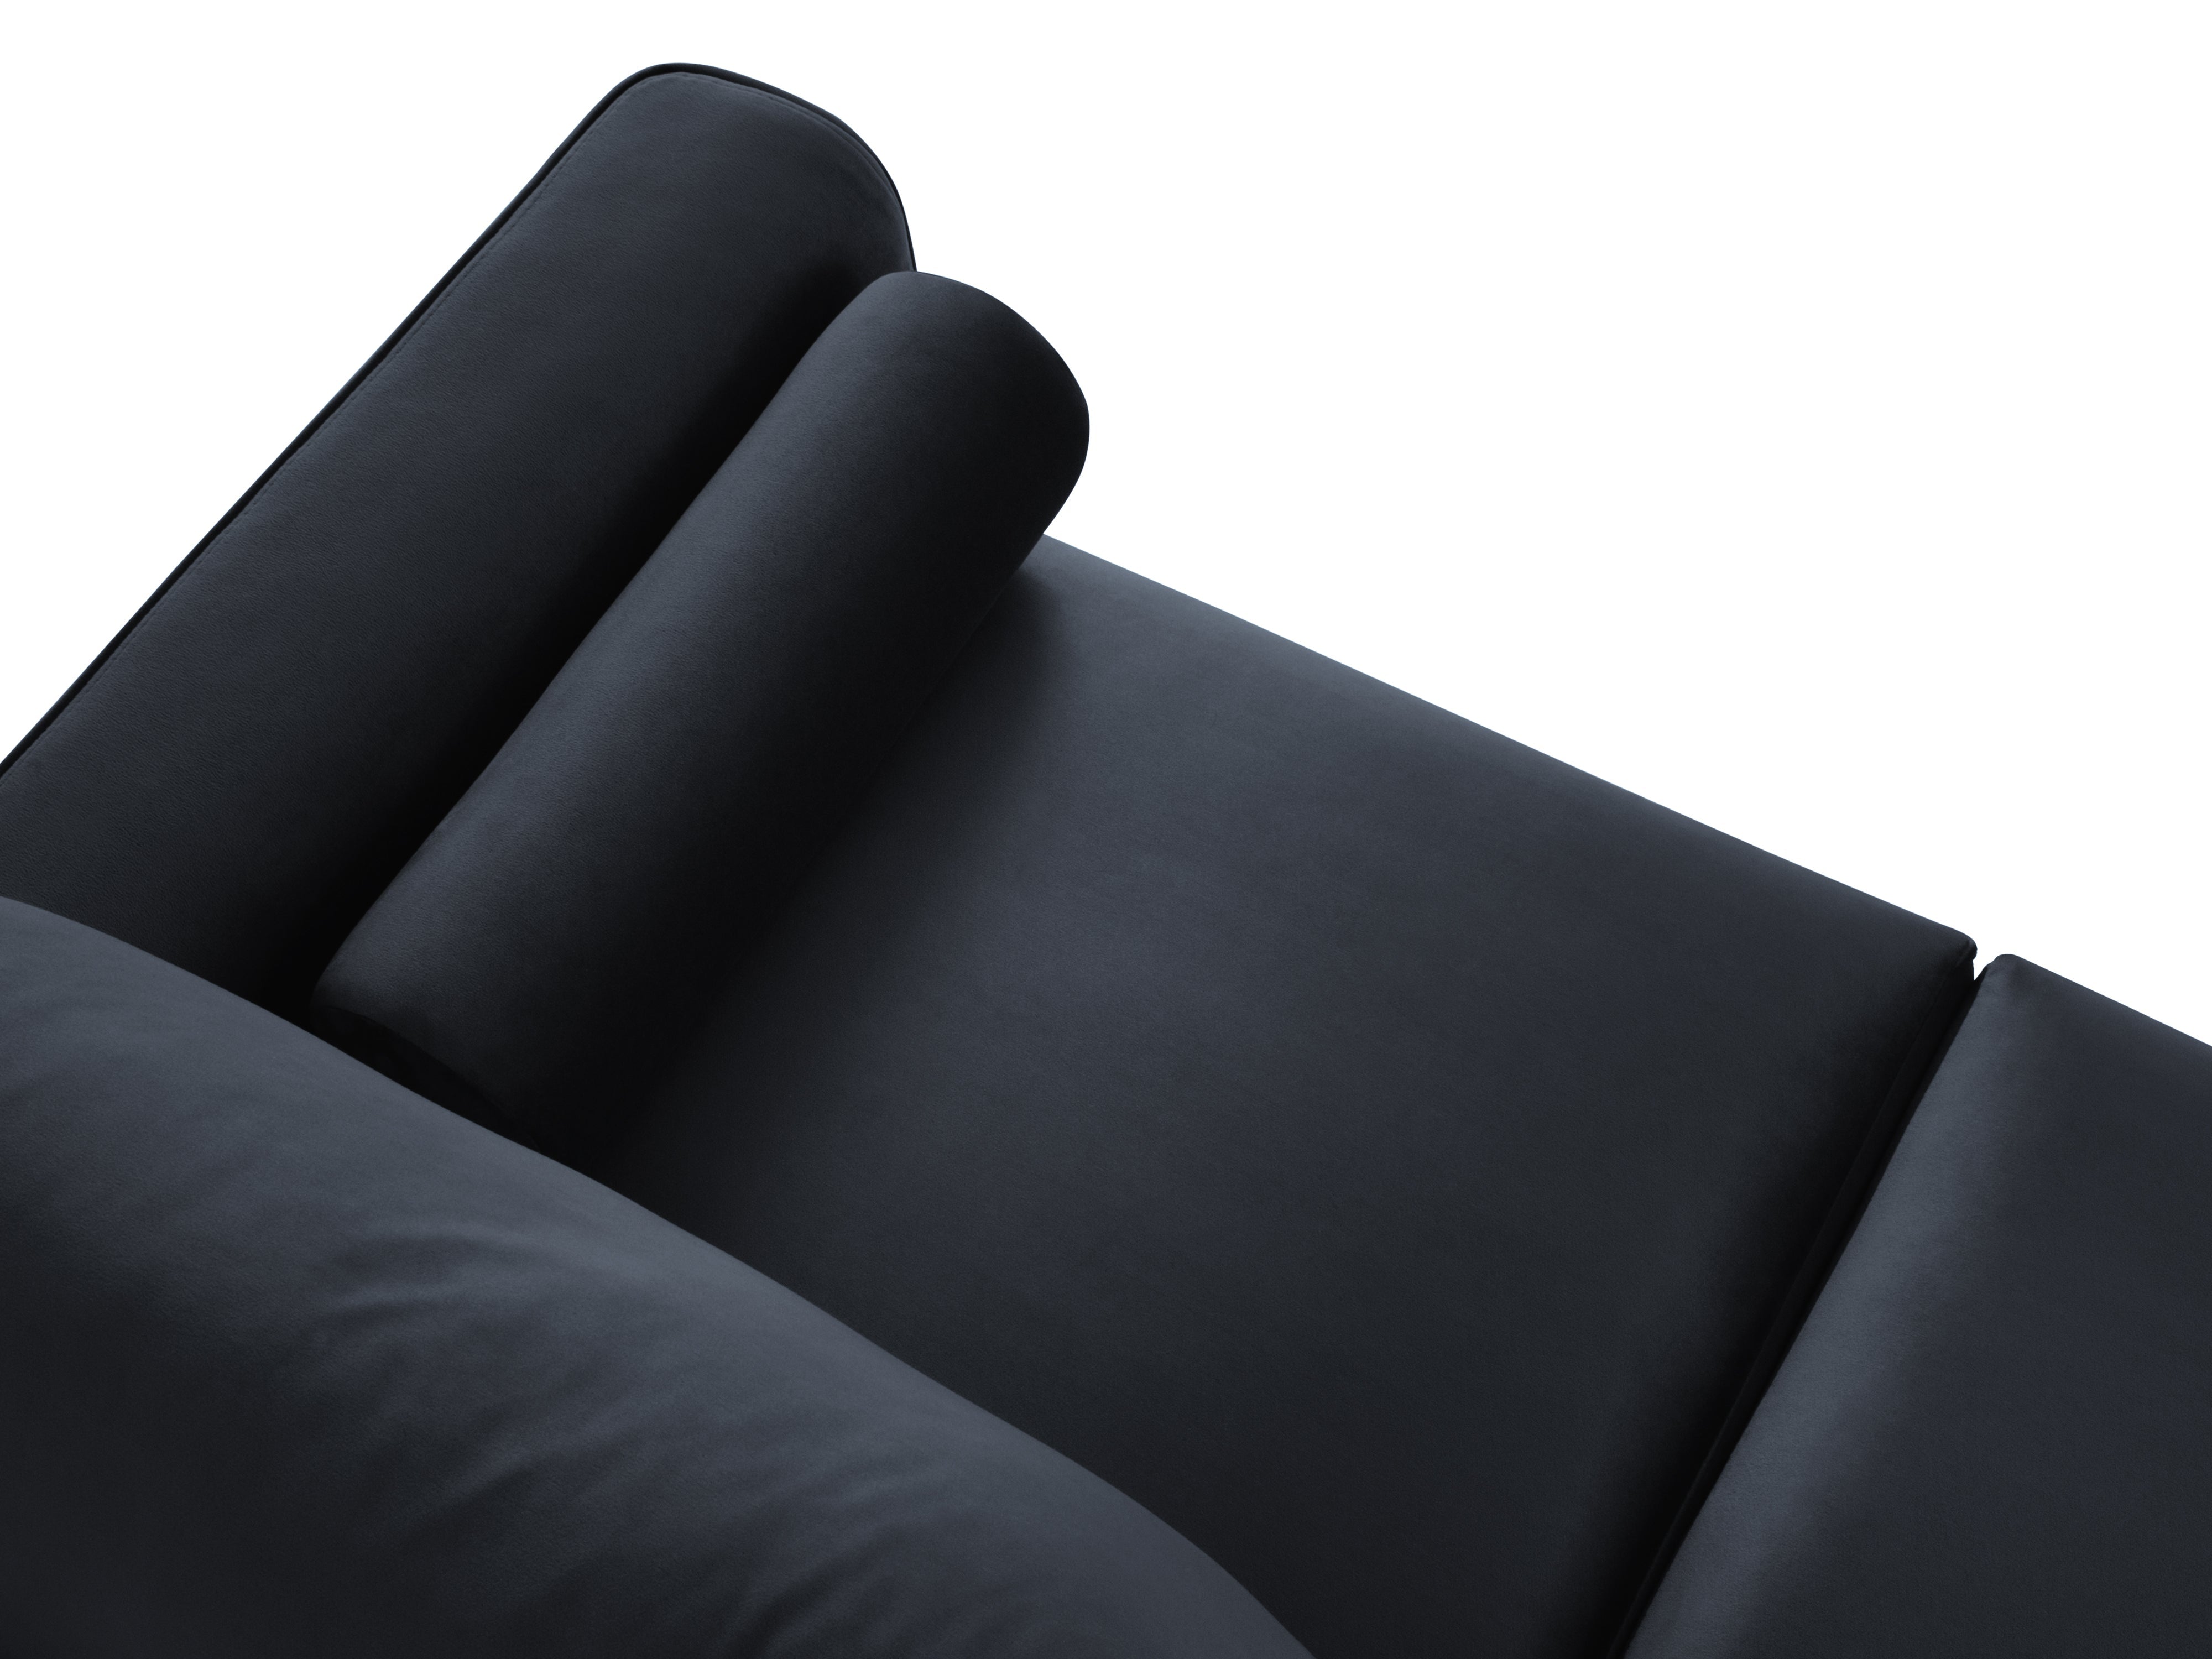 Sofa with a deep dark blue seat